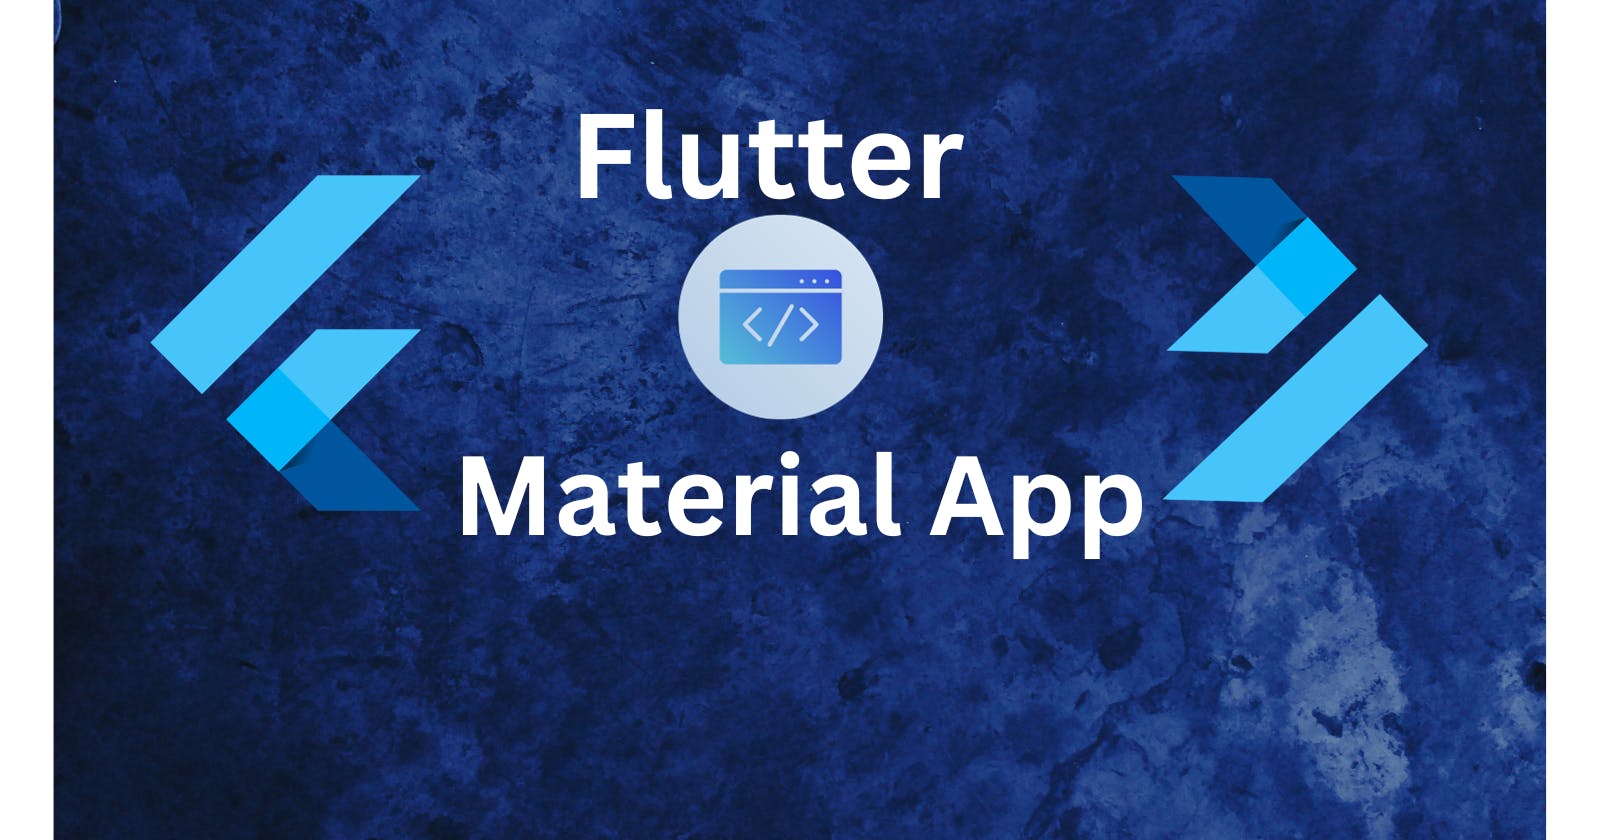 MaterialApp: The Foundation of Flutter Design